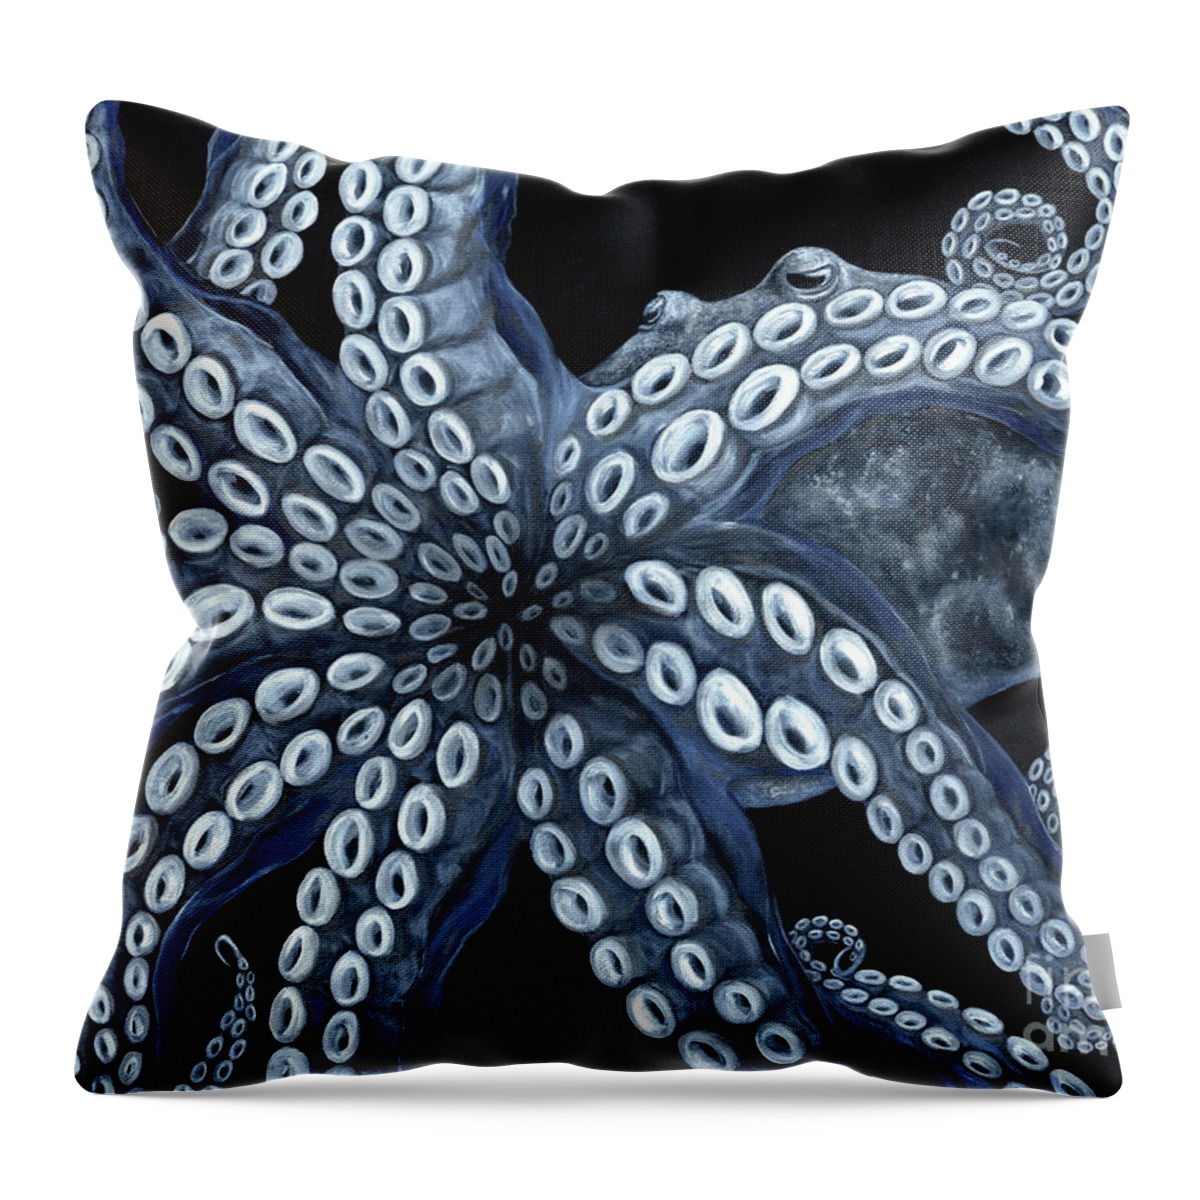 Octopus Throw Pillow featuring the painting Octopoda by JoAnn Wheeler